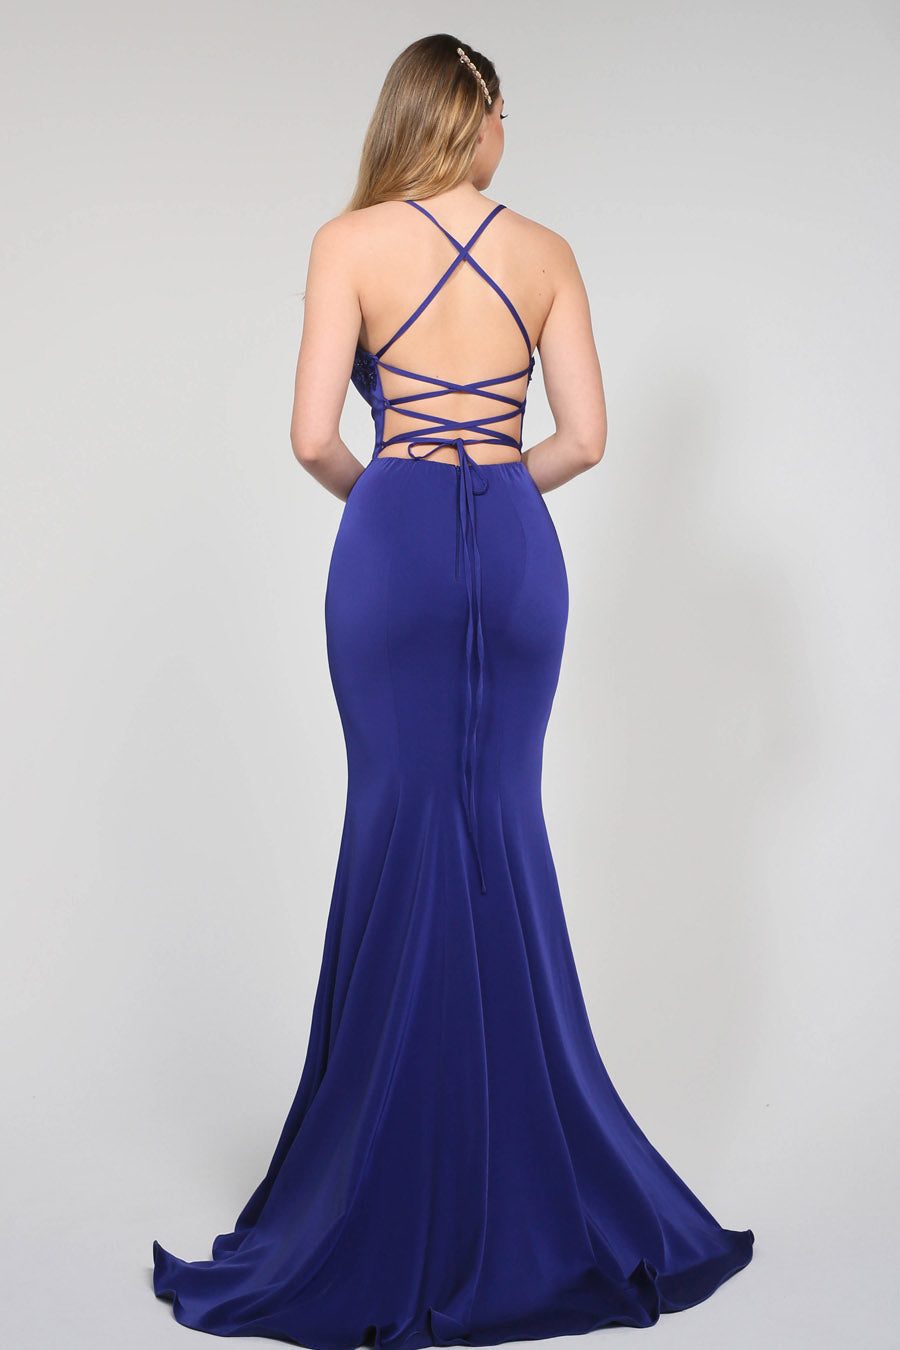 Tina Holly Couture Designer BA111 Blue Purple Satin Mermaid Formal Dress Tina Holly Couture$ AfterPay Humm ZipPay LayBuy Sezzle